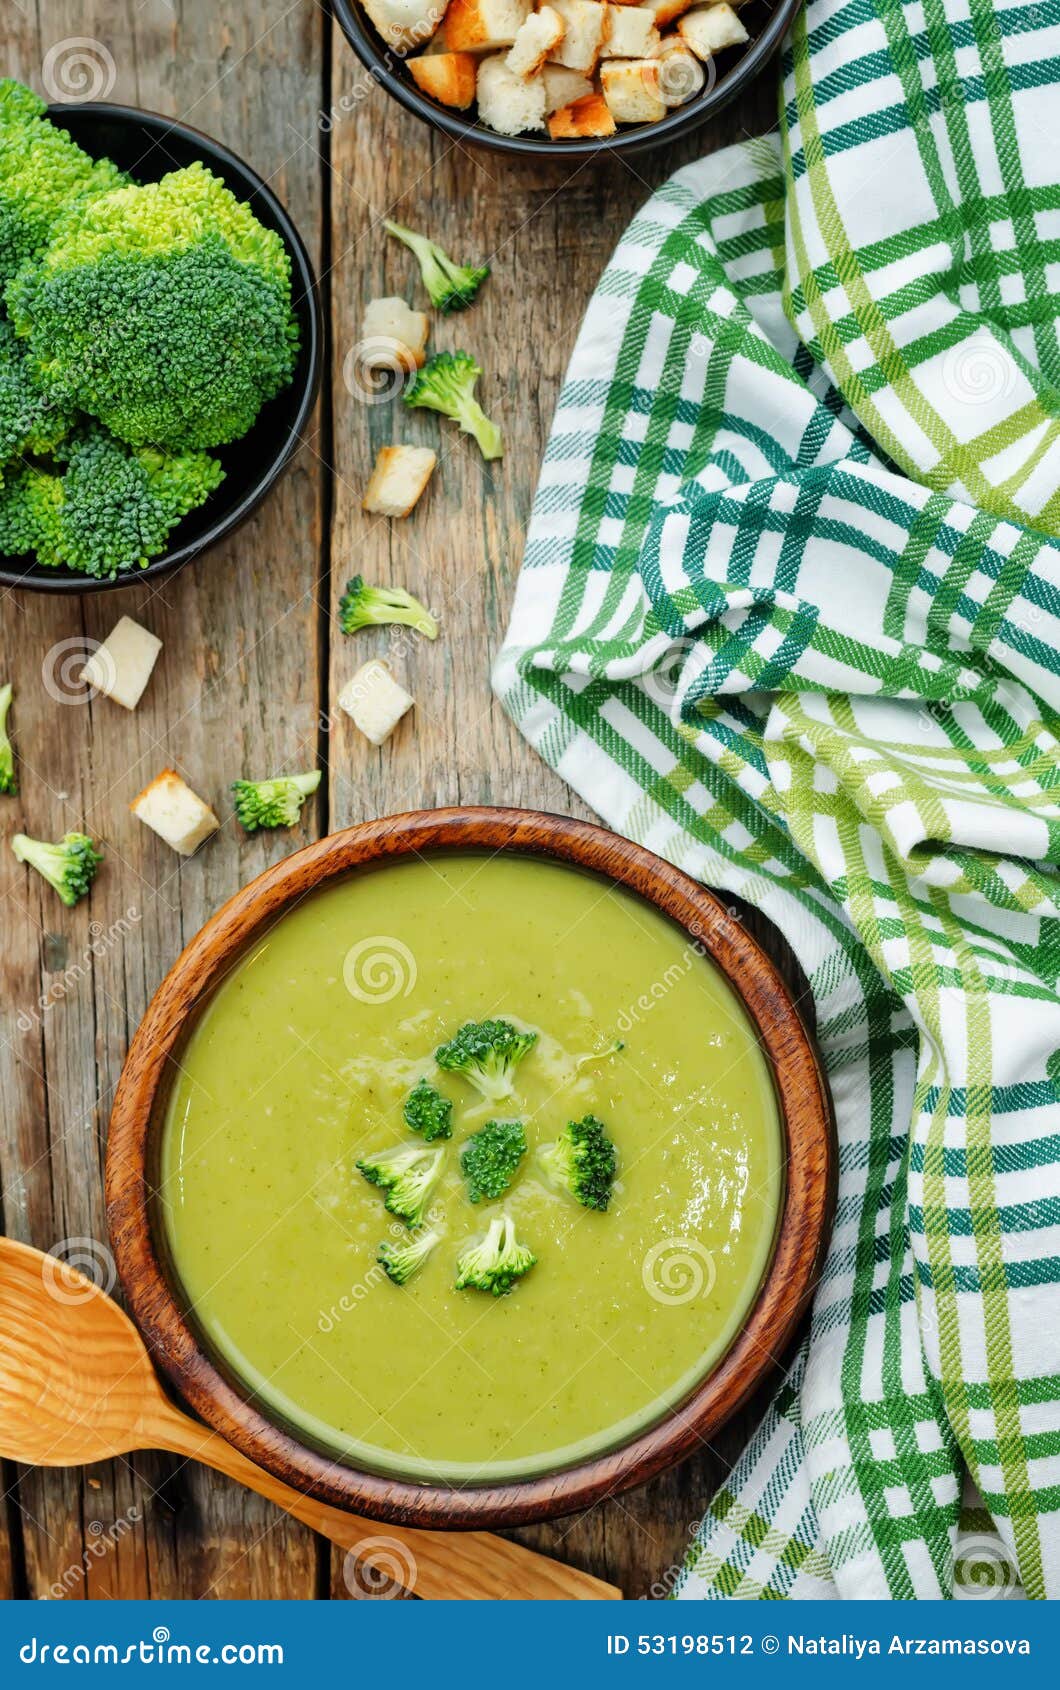 Broccoli soup puree stock photo. Image of cuisine, supper - 53198512